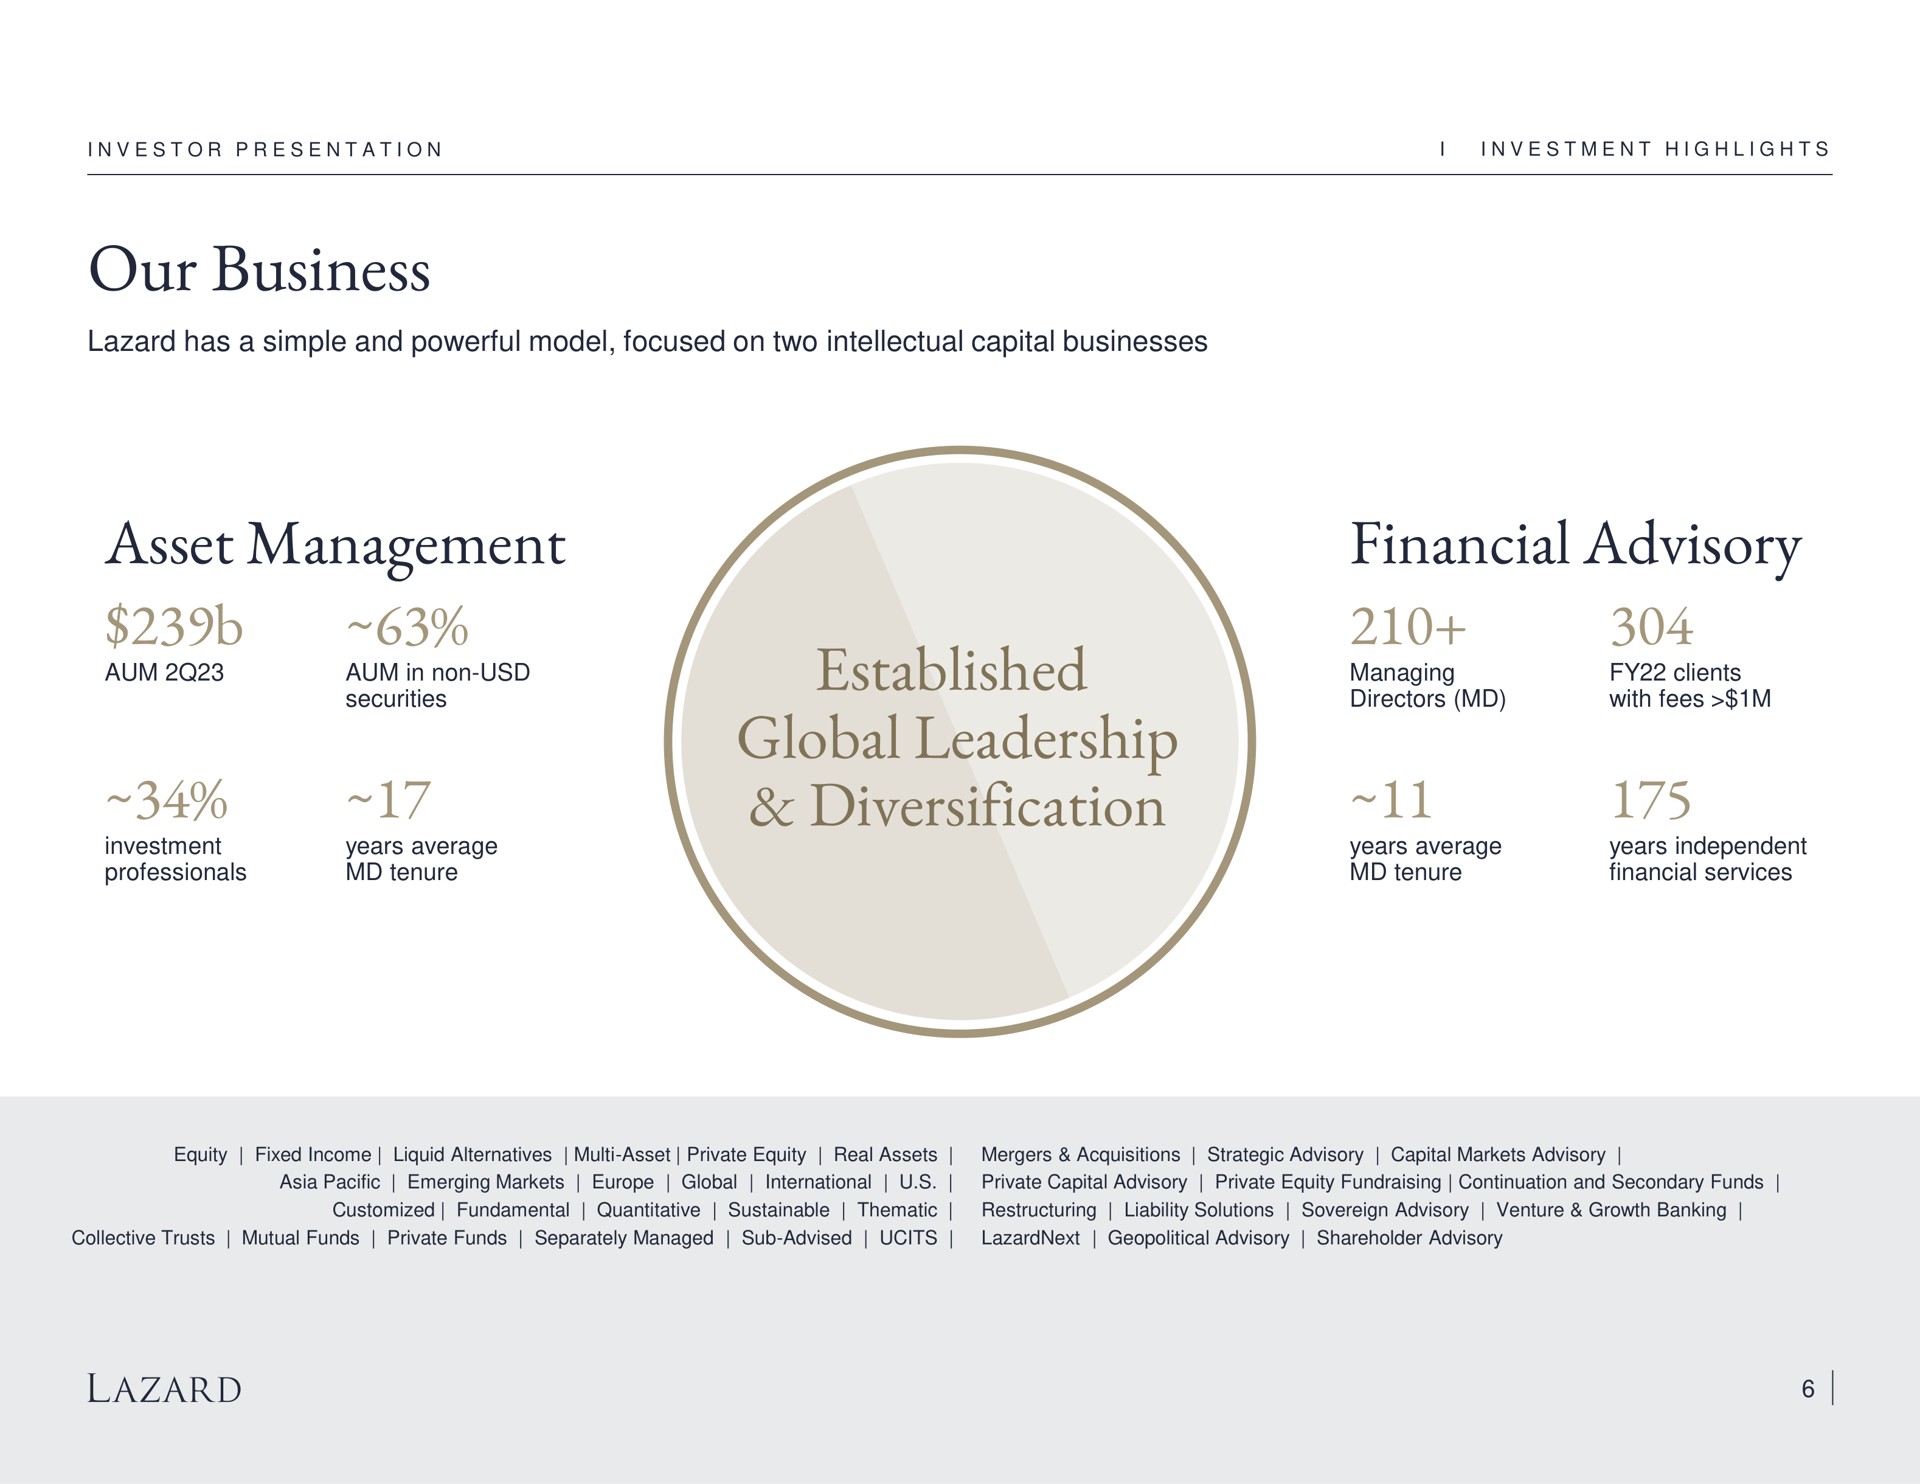 our business asset management established global leadership diversification financial advisory | Lazard